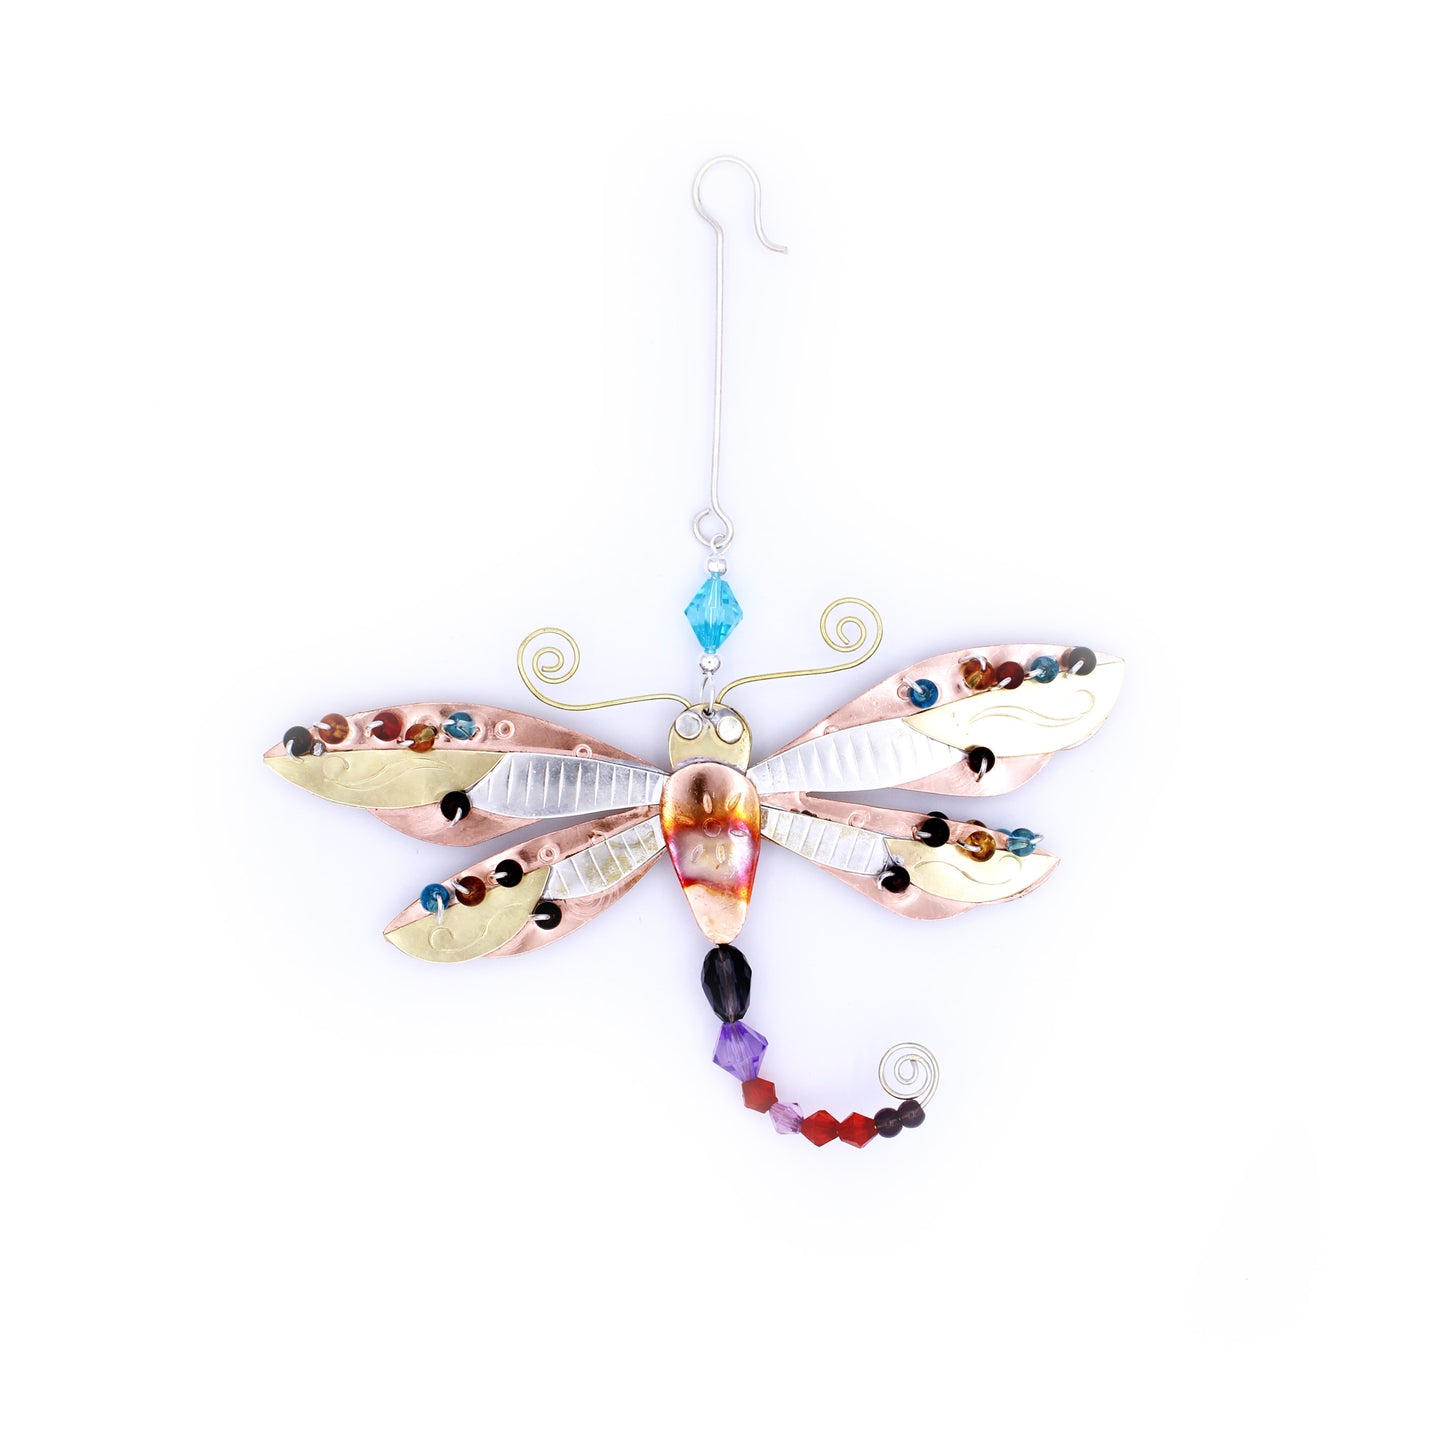 Handmade Metal Ornament: Bright Wings Dragonfly